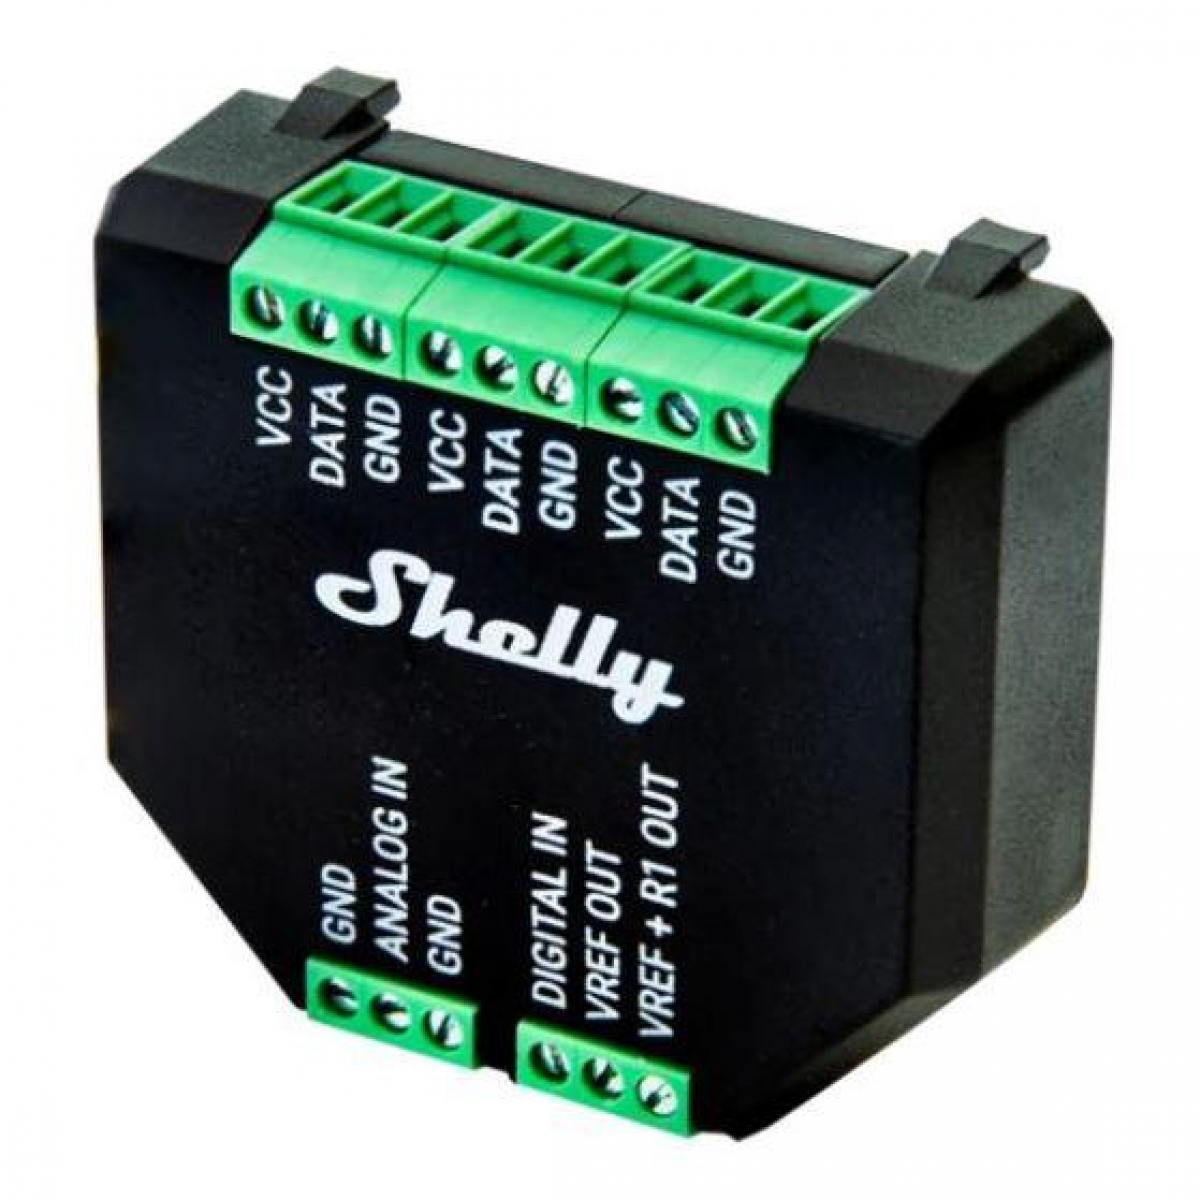 Shelly® Plus Temperatur Sensor Erweiterung Addon Add On für Shelly® Plus 1/1PM, Shelly Plus 2PM, Shelly Plus i4/i4DC max 5 Sensoren